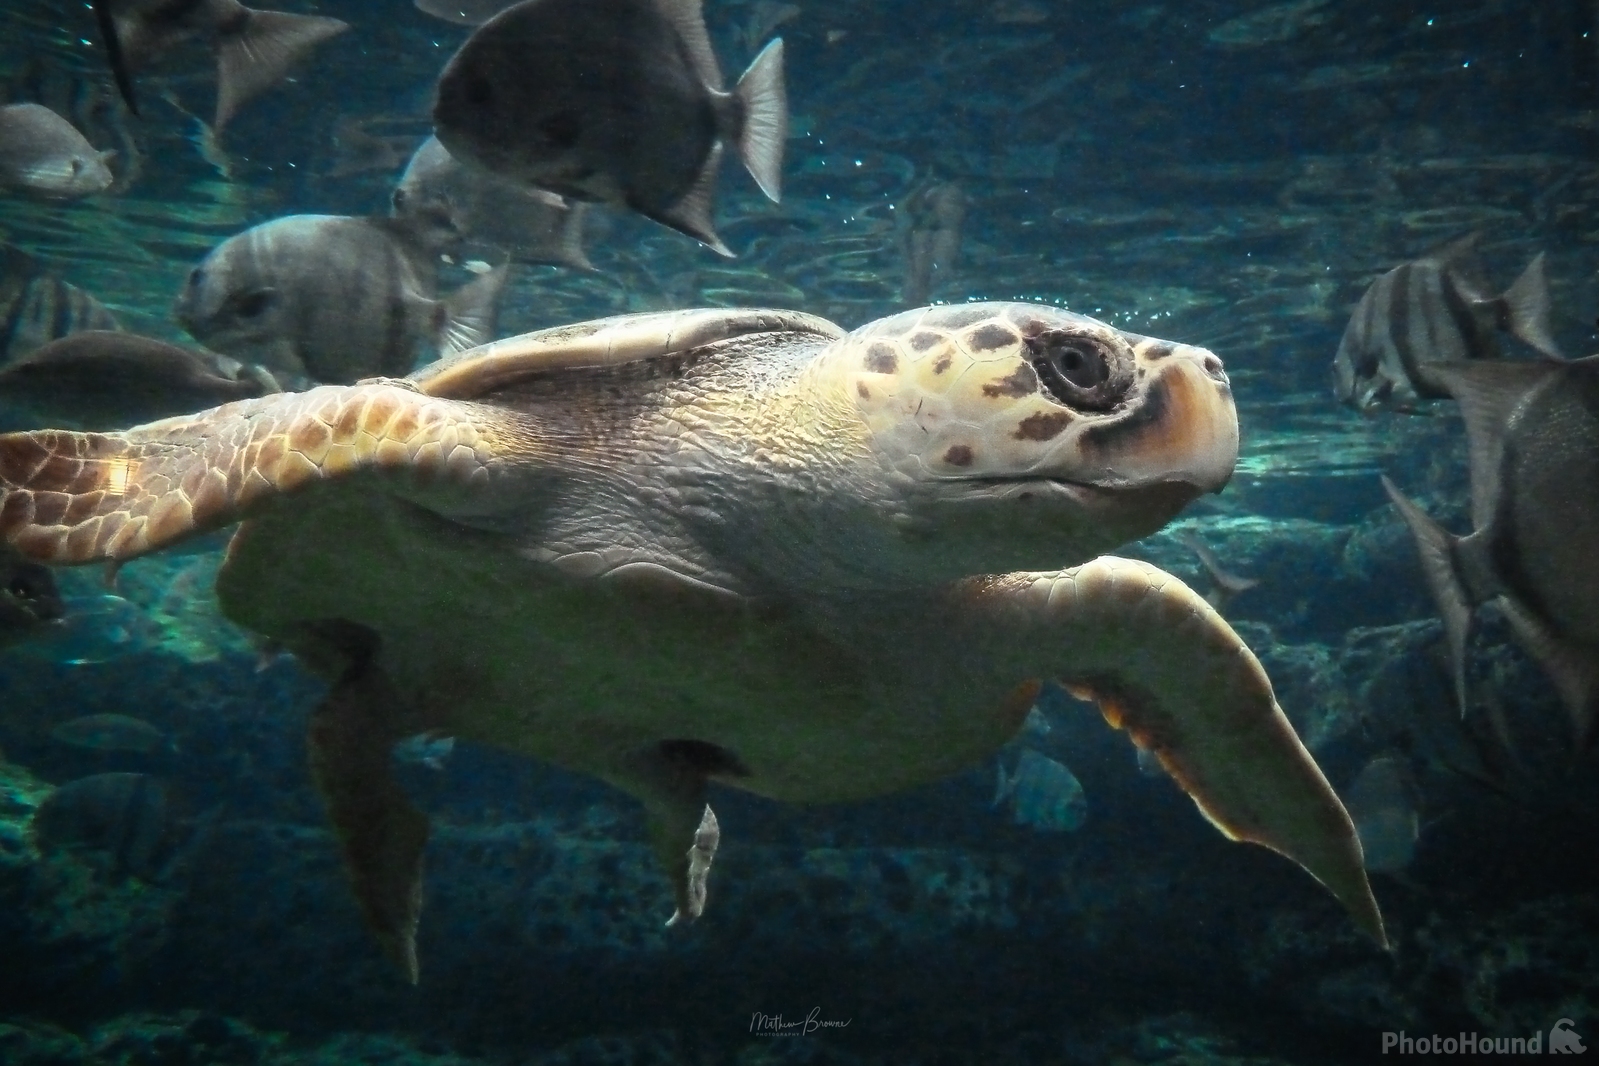 Image of Georgia Aquarium by Mathew Browne